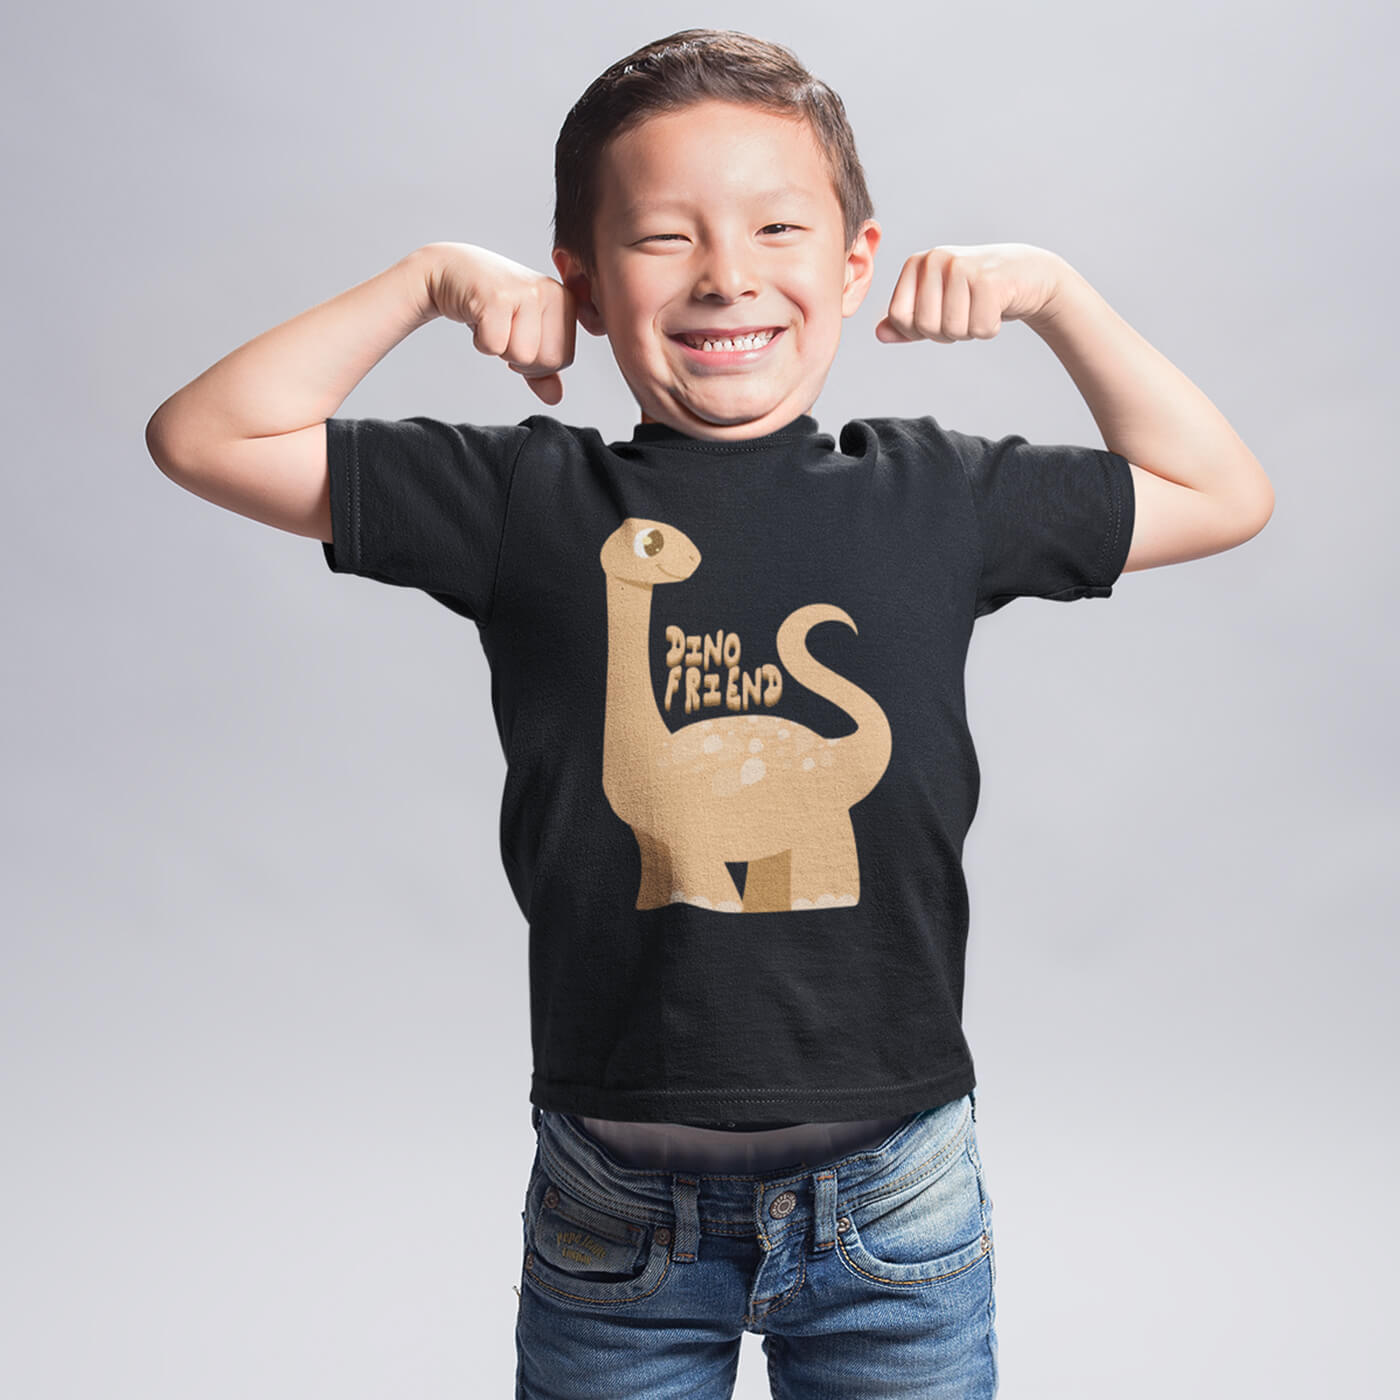 Kids t shirts Dino Friend with worldwide shipping on Vivamake.com